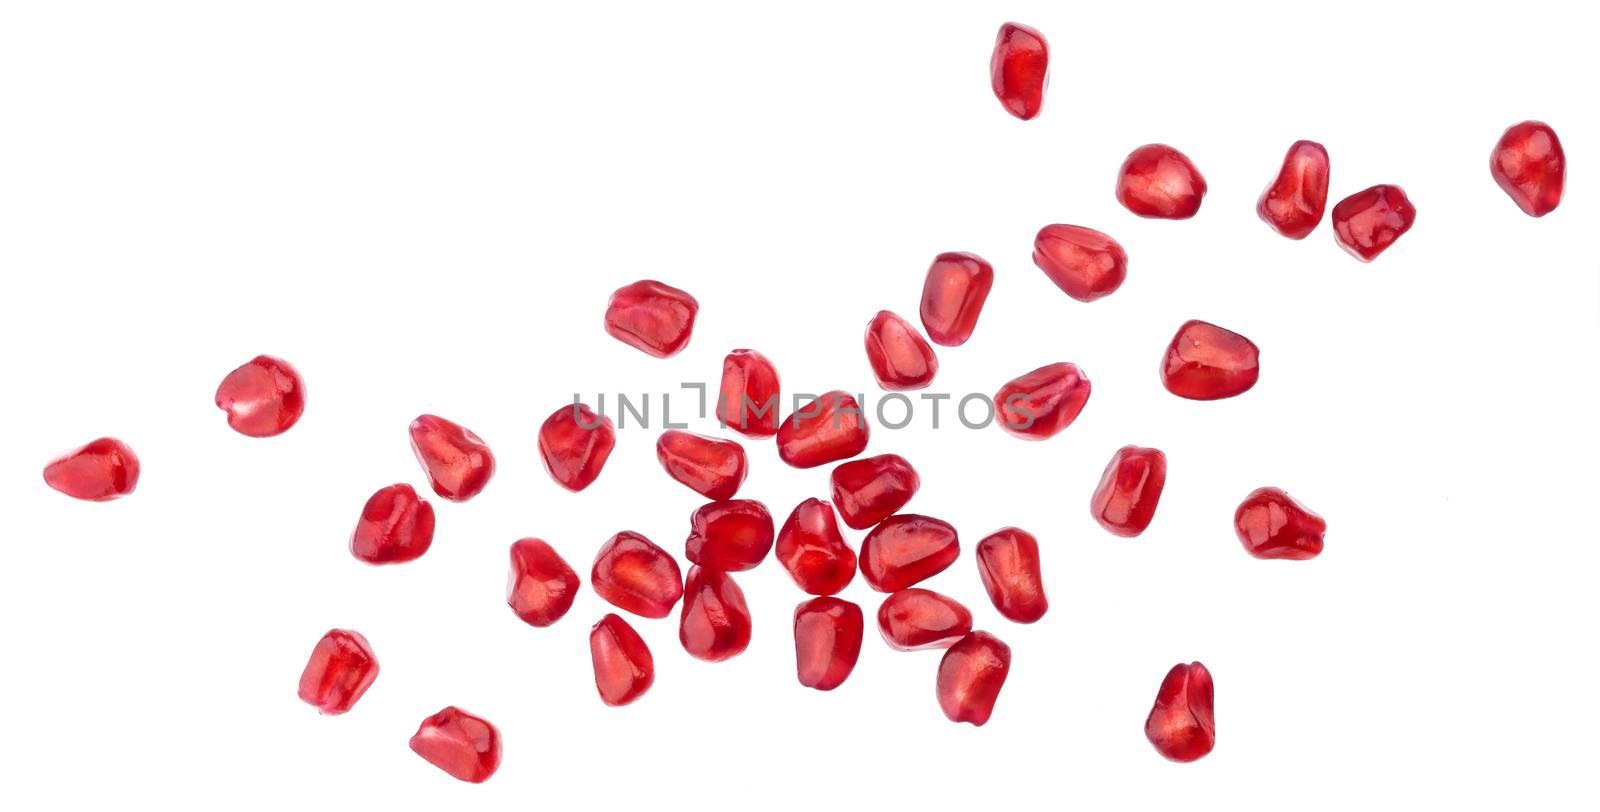 Pomegranate seeds isolated on white background by xamtiw